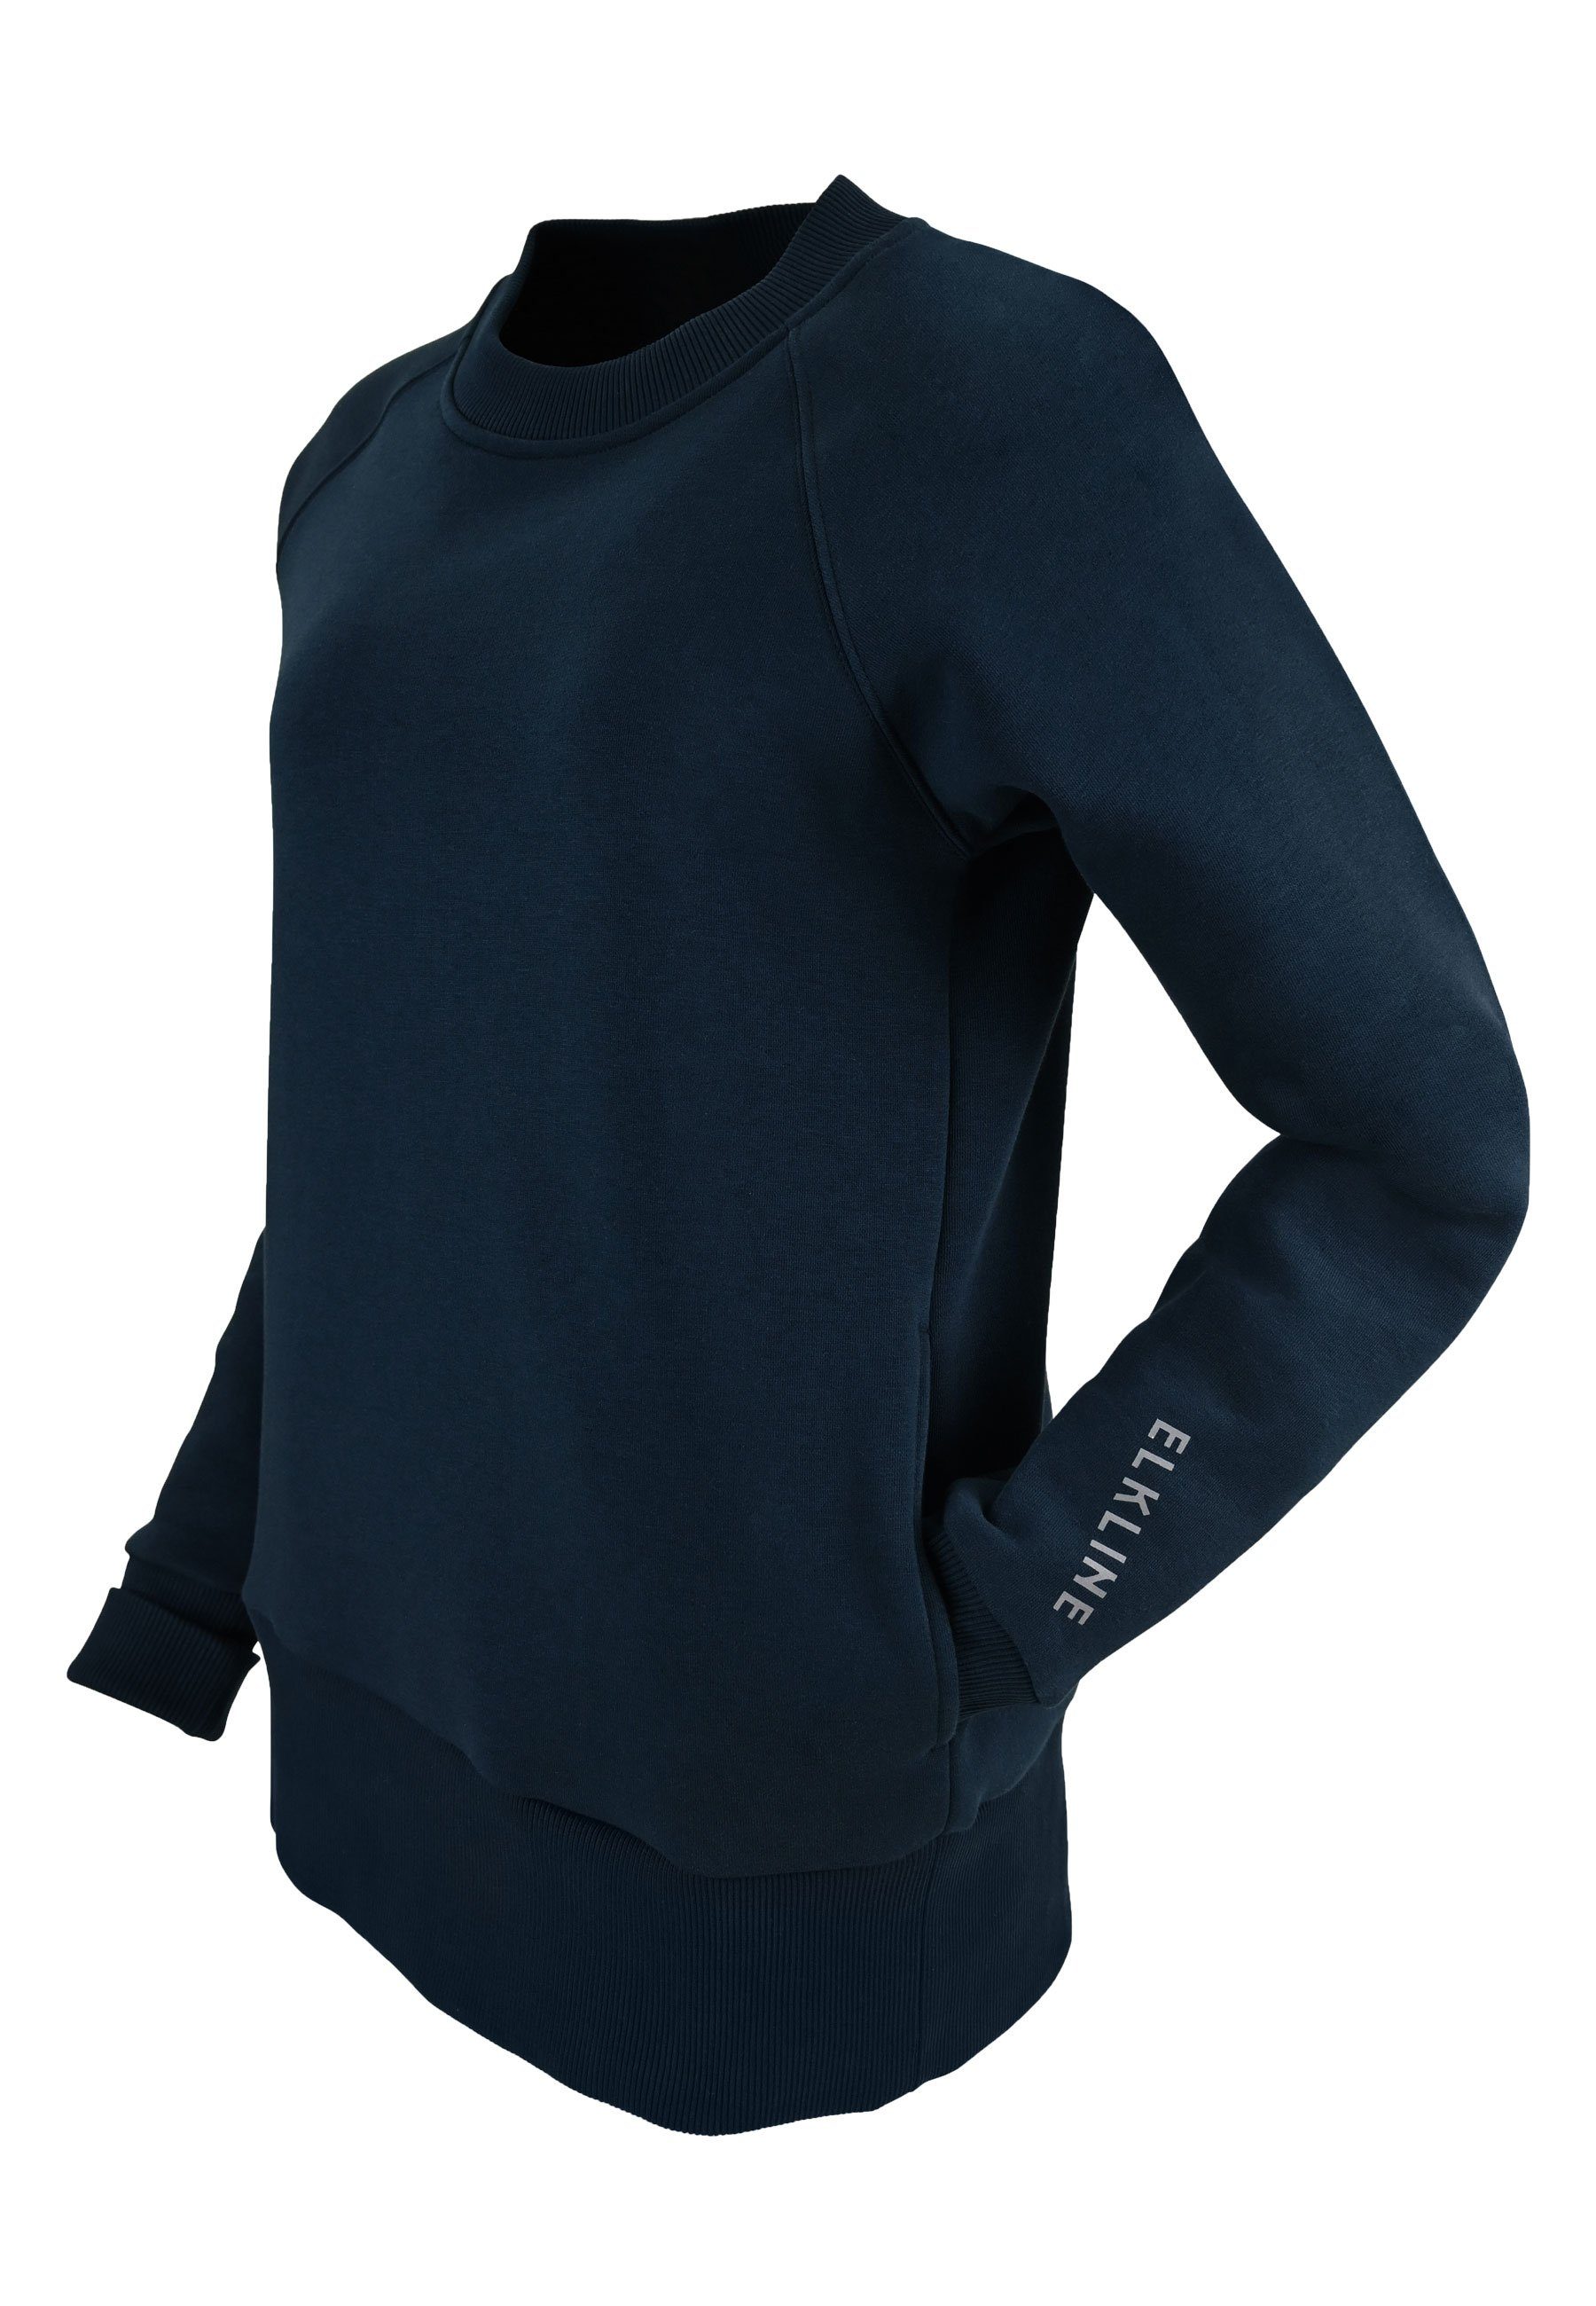 Elkline Sweatshirt fahrradtauglich - blueshadow Balance Sweatshirt